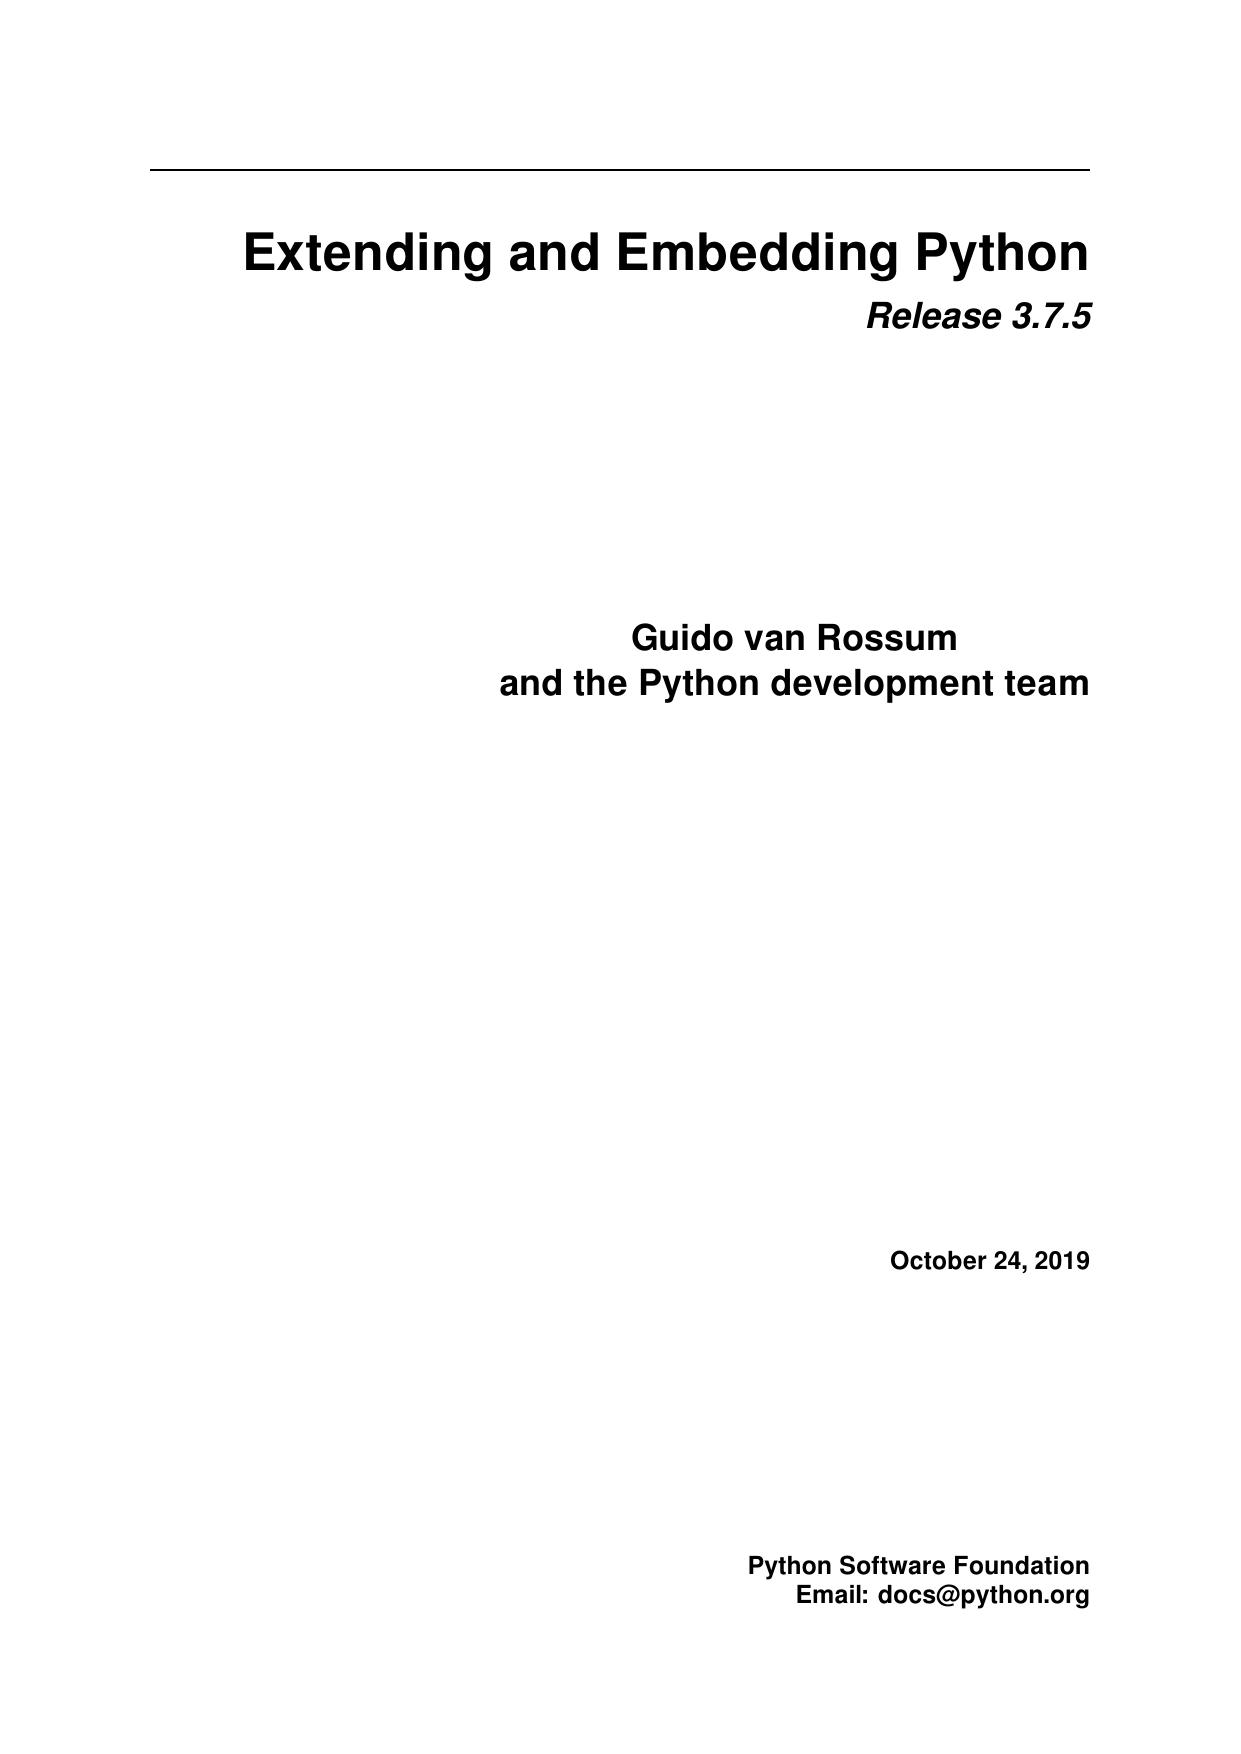 Extending and Embedding Python by Guido van Rossum & the Python development team